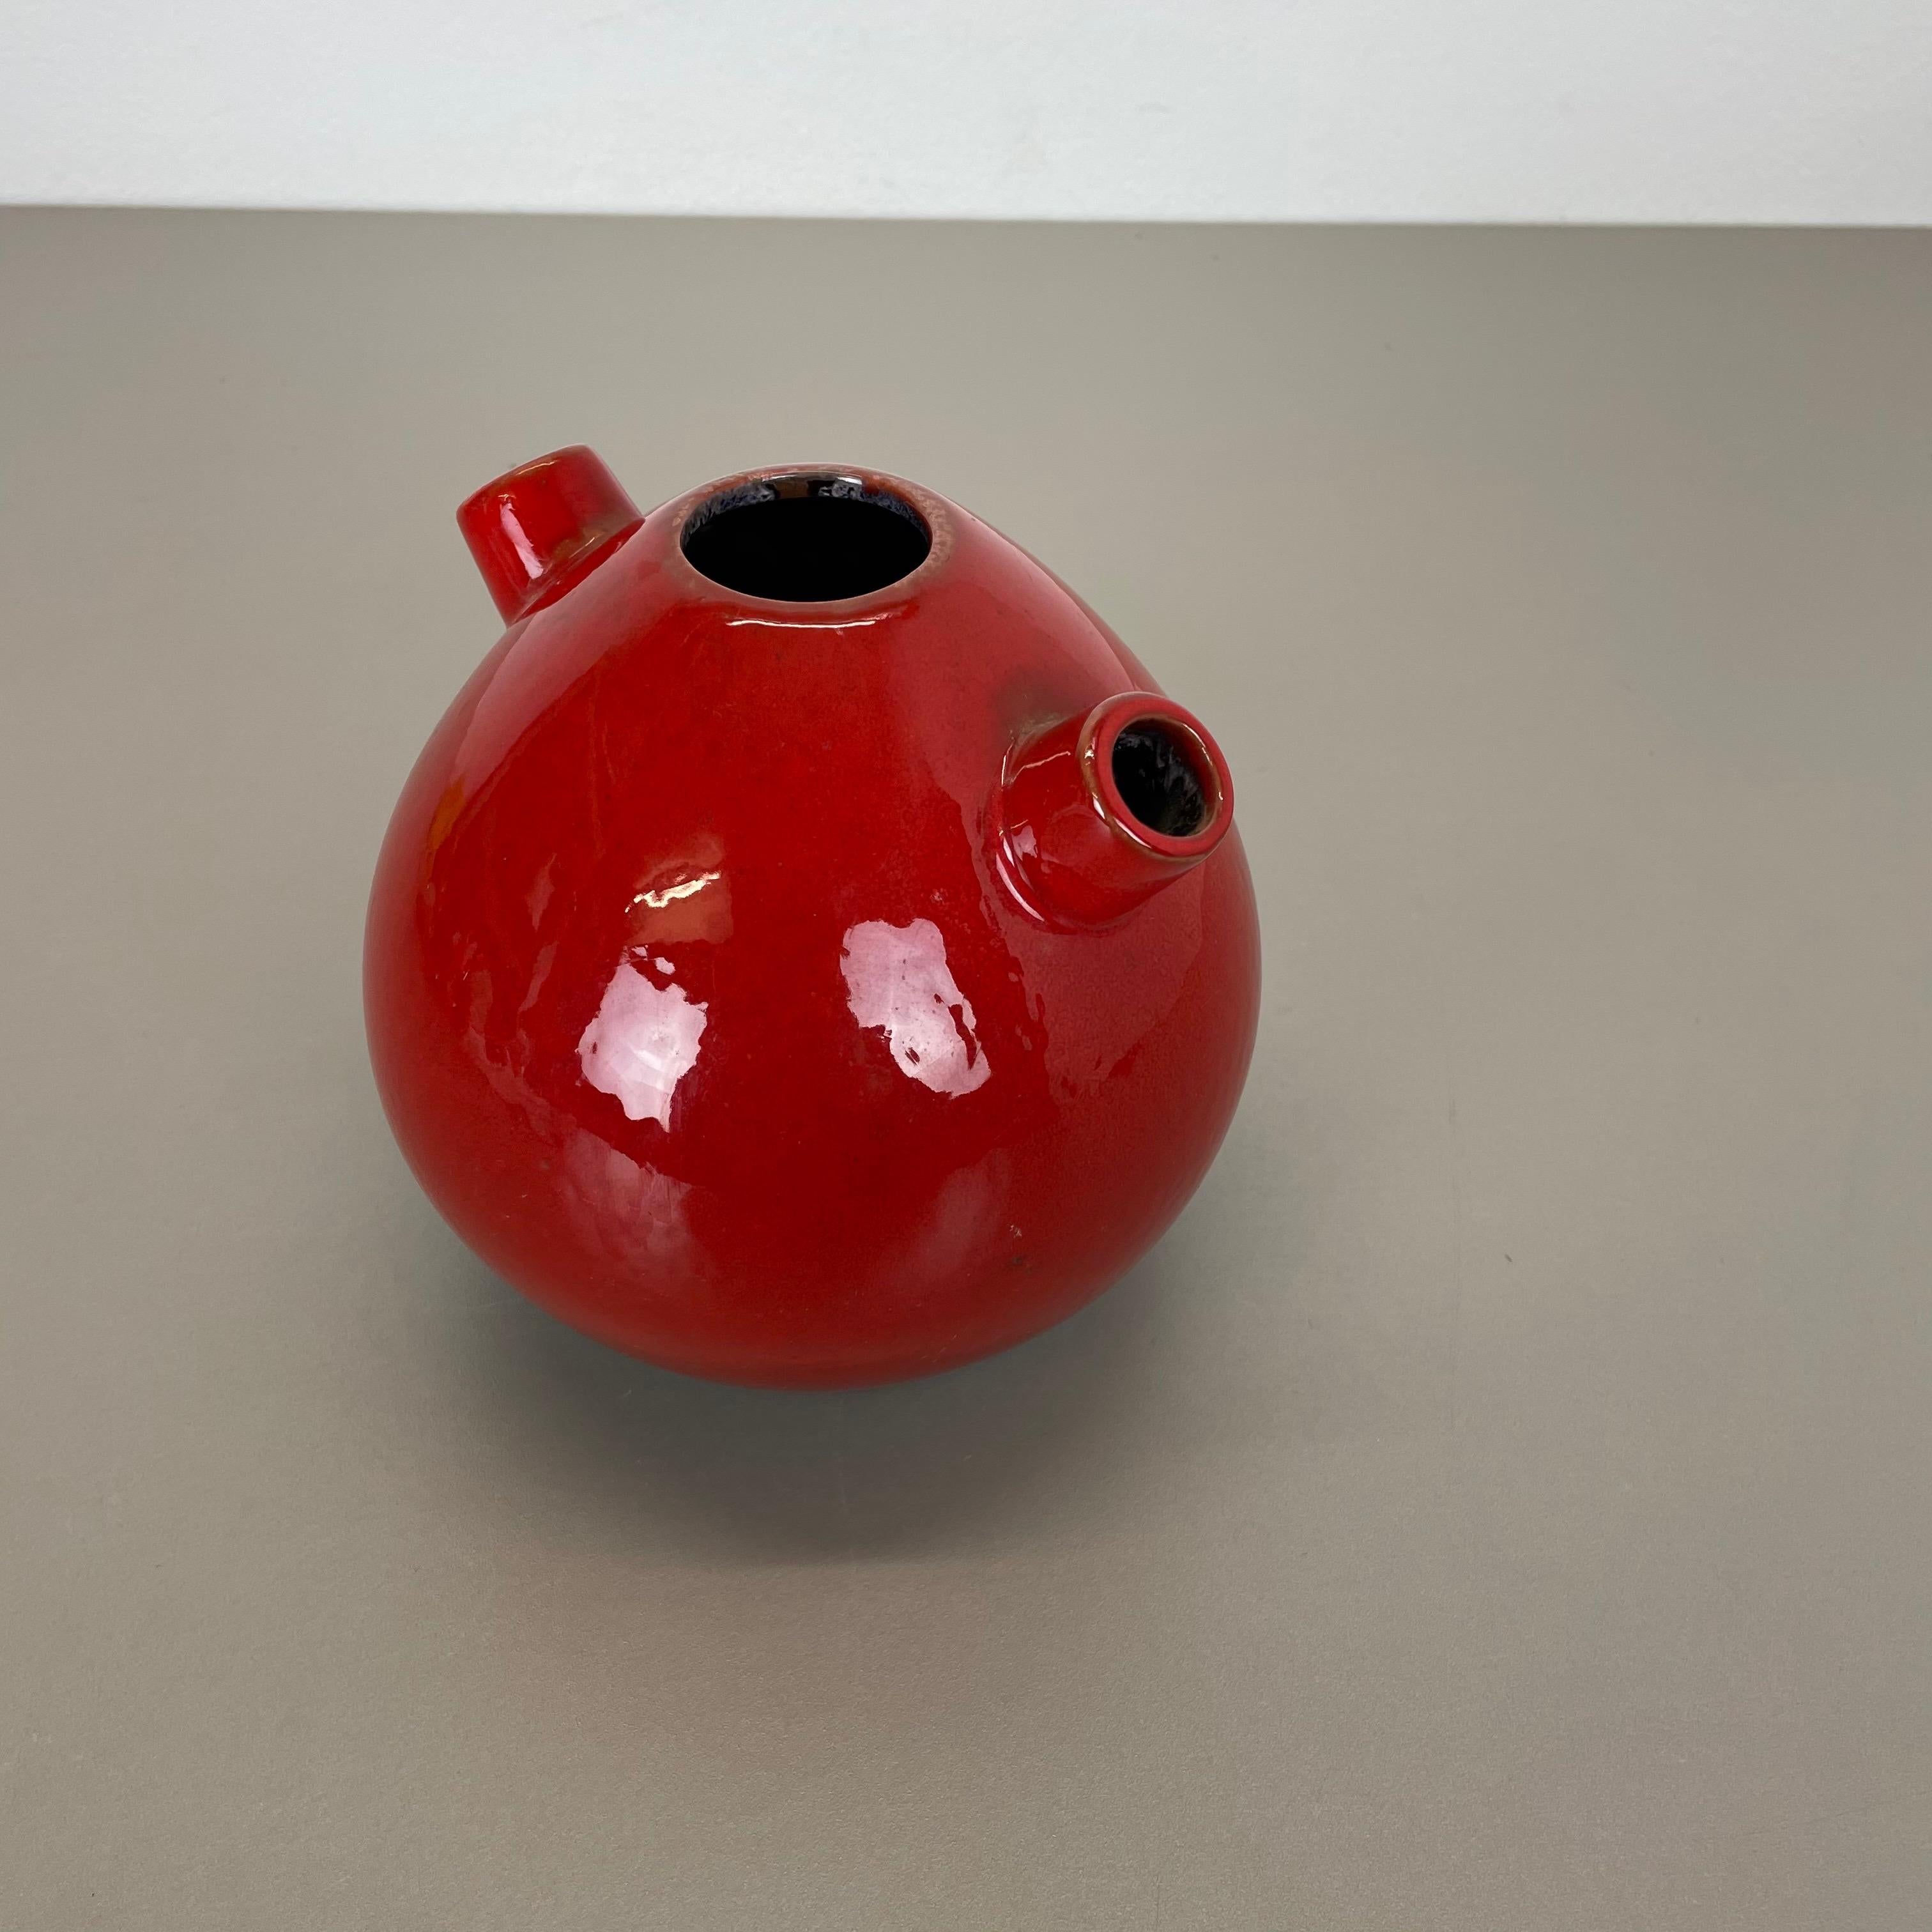 Original 1970 Red Ceramic Studio Pottery Vase by Marei Ceramics, Germany For Sale 1